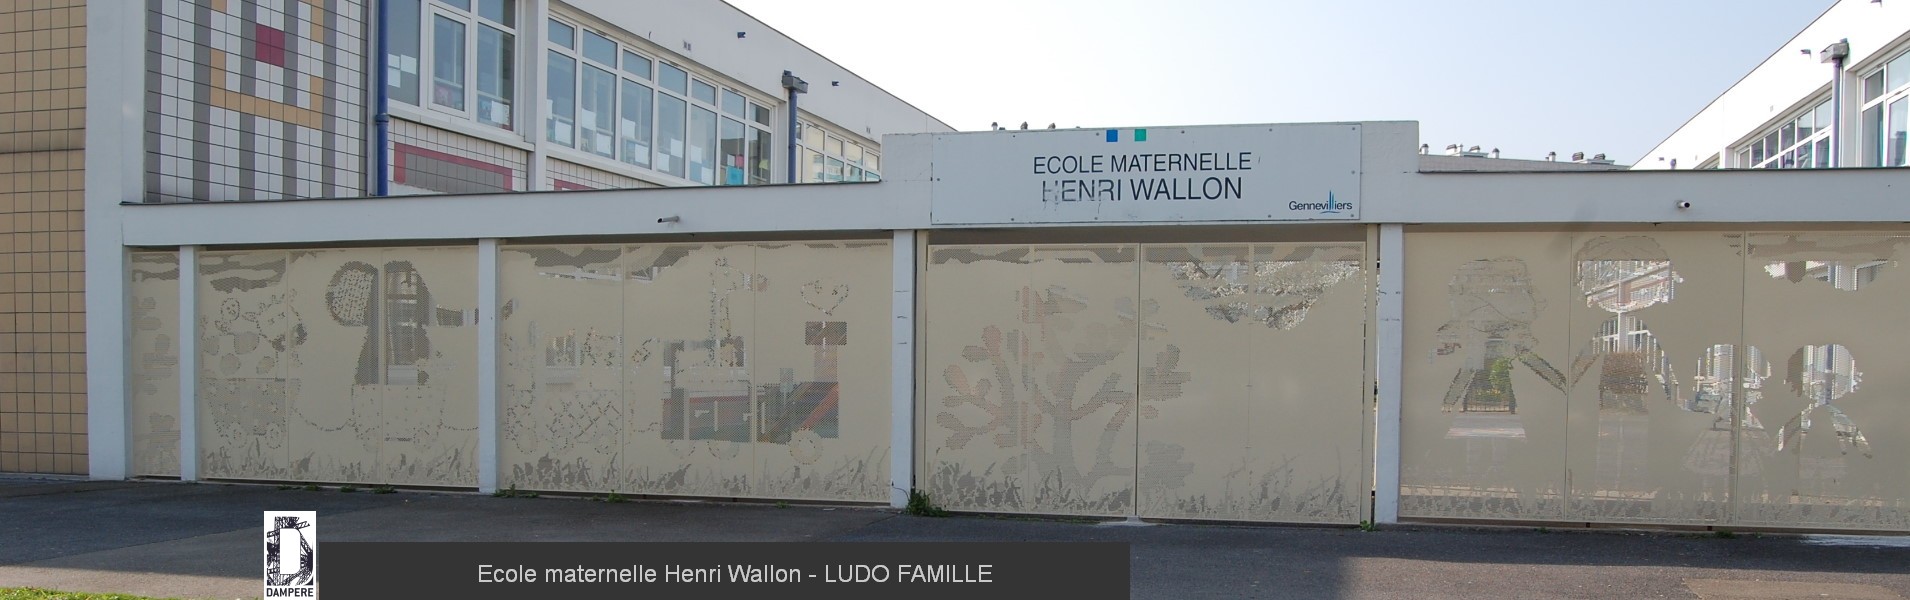 Ecole maternelle Henri Wallon LUDO FAMILLE 3